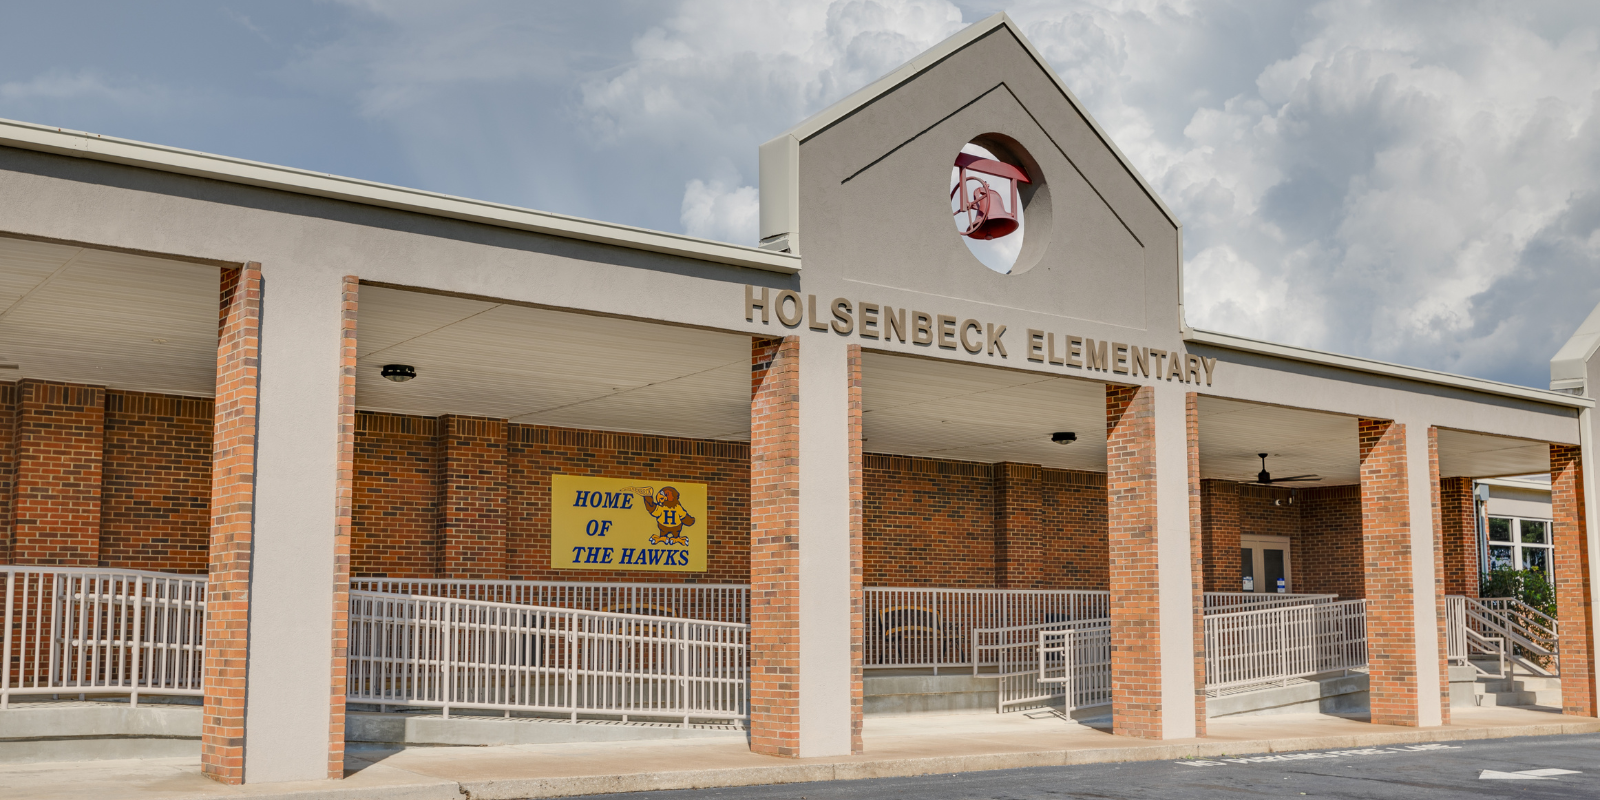 Holsenbeck Elementary School outside